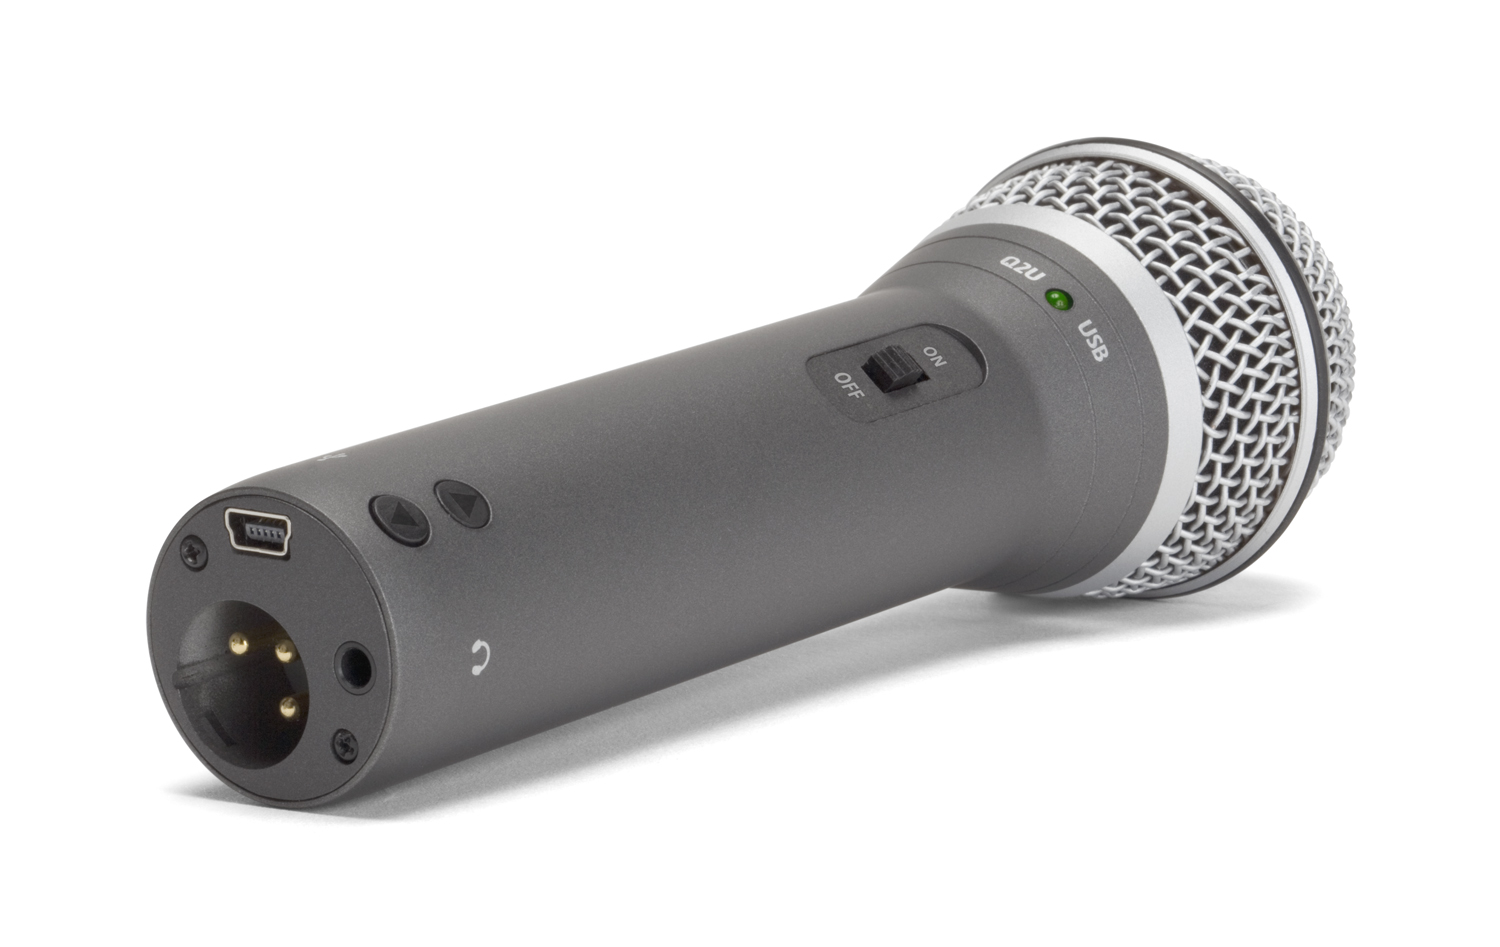 The Samson Q2U microphone